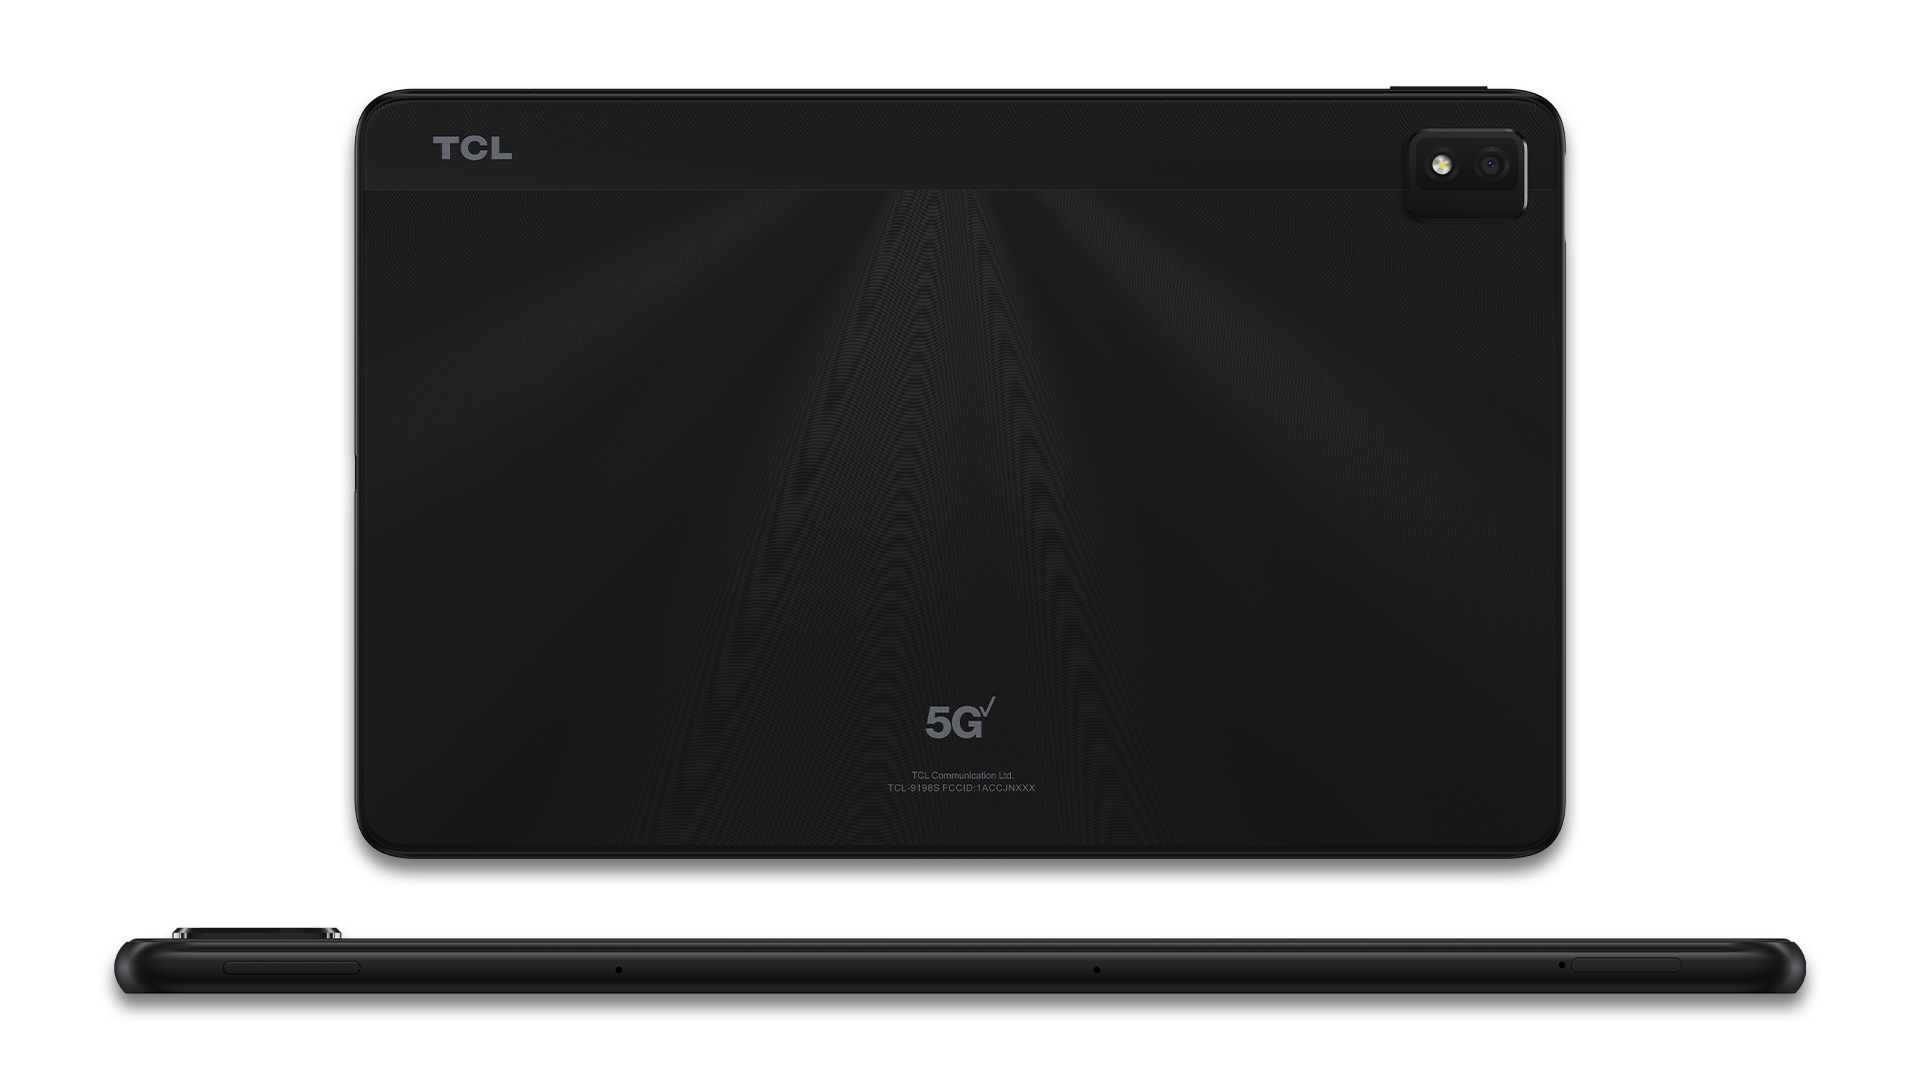 Bagian belakang dan konfigurasi tablet TCL TAB Pro 5G.